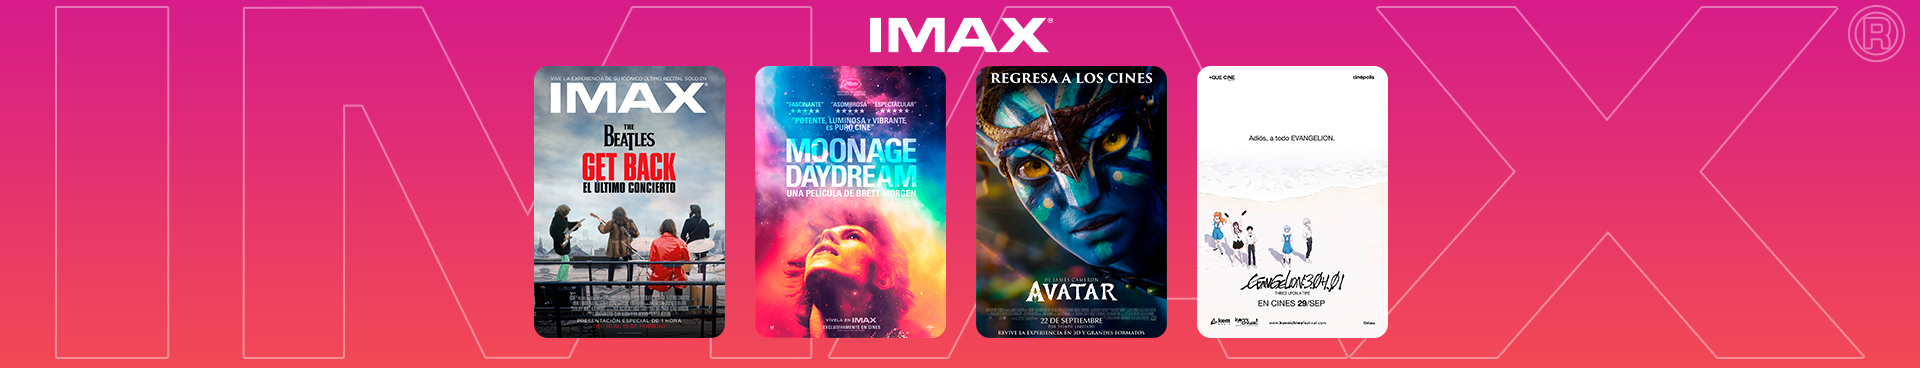 Estrenos IMAX